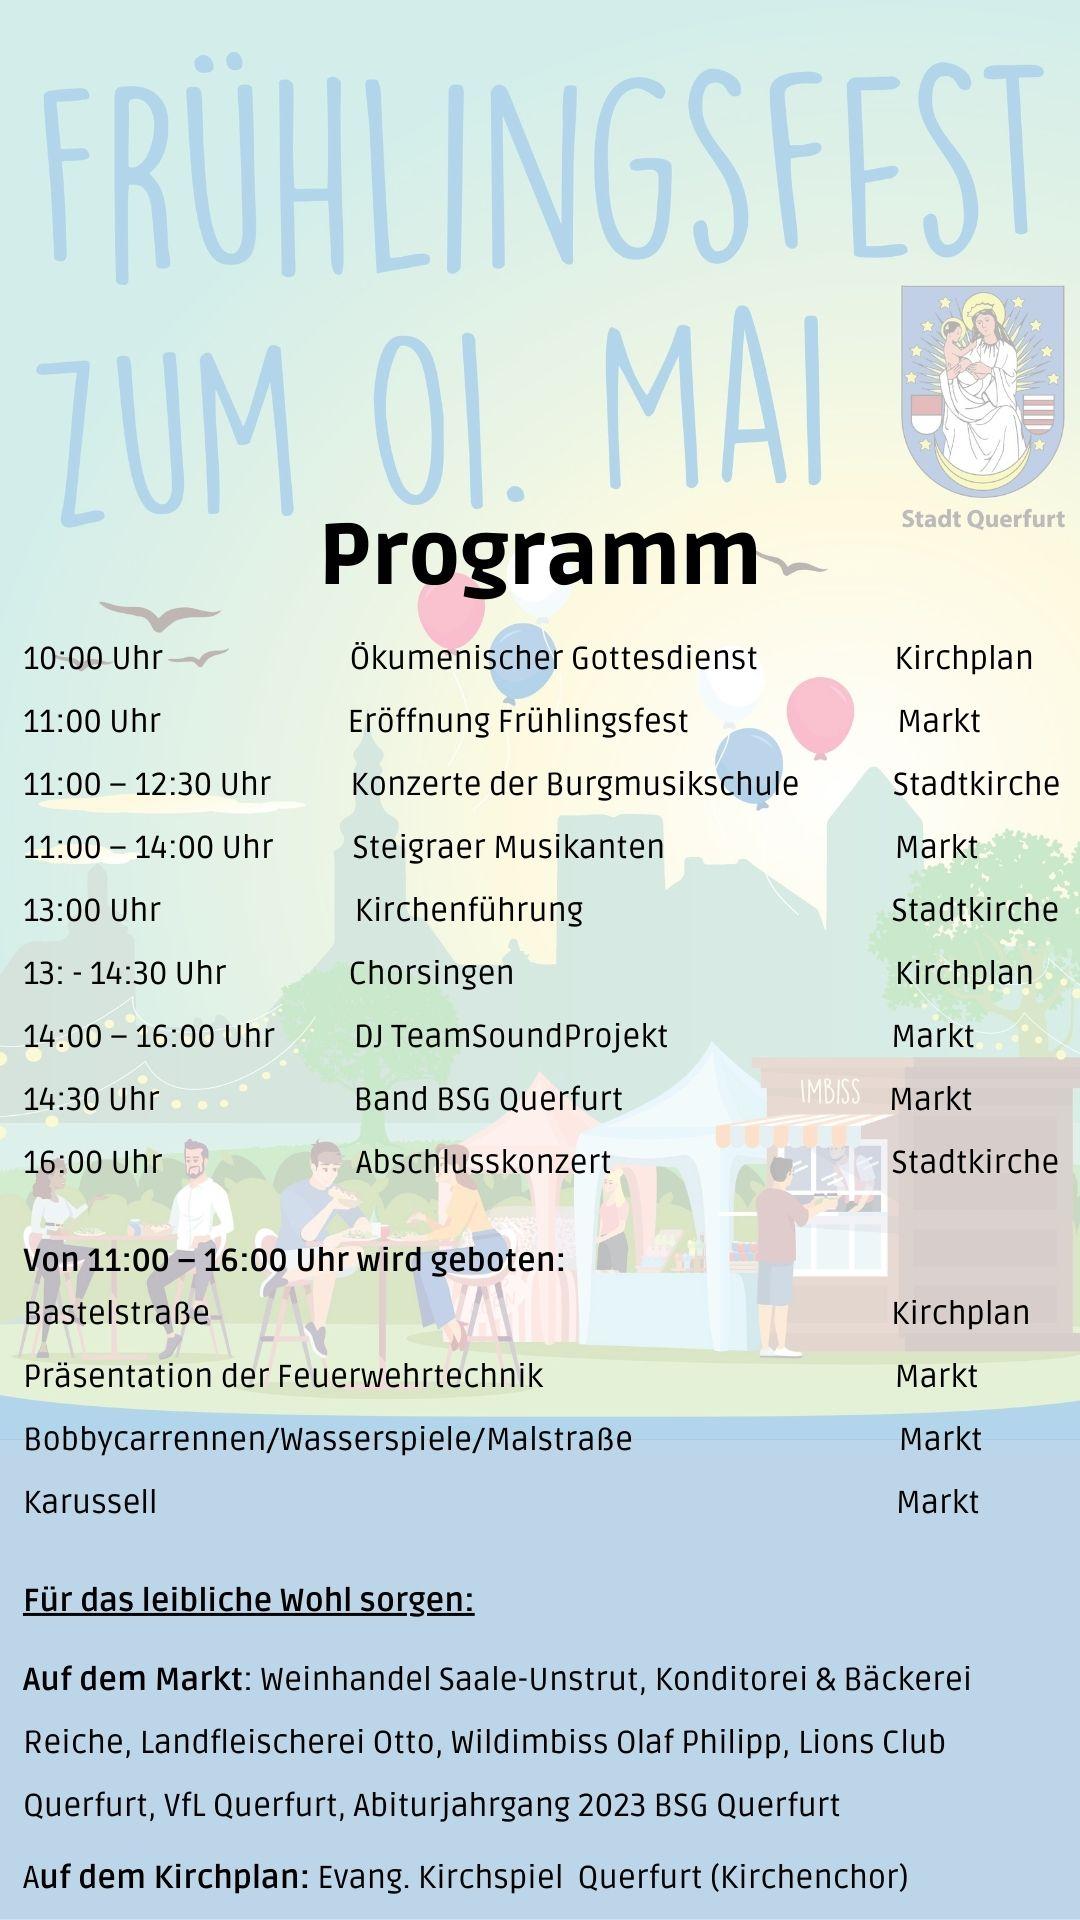 Programm - Frühlingsfest Stadt Querfurt 2022